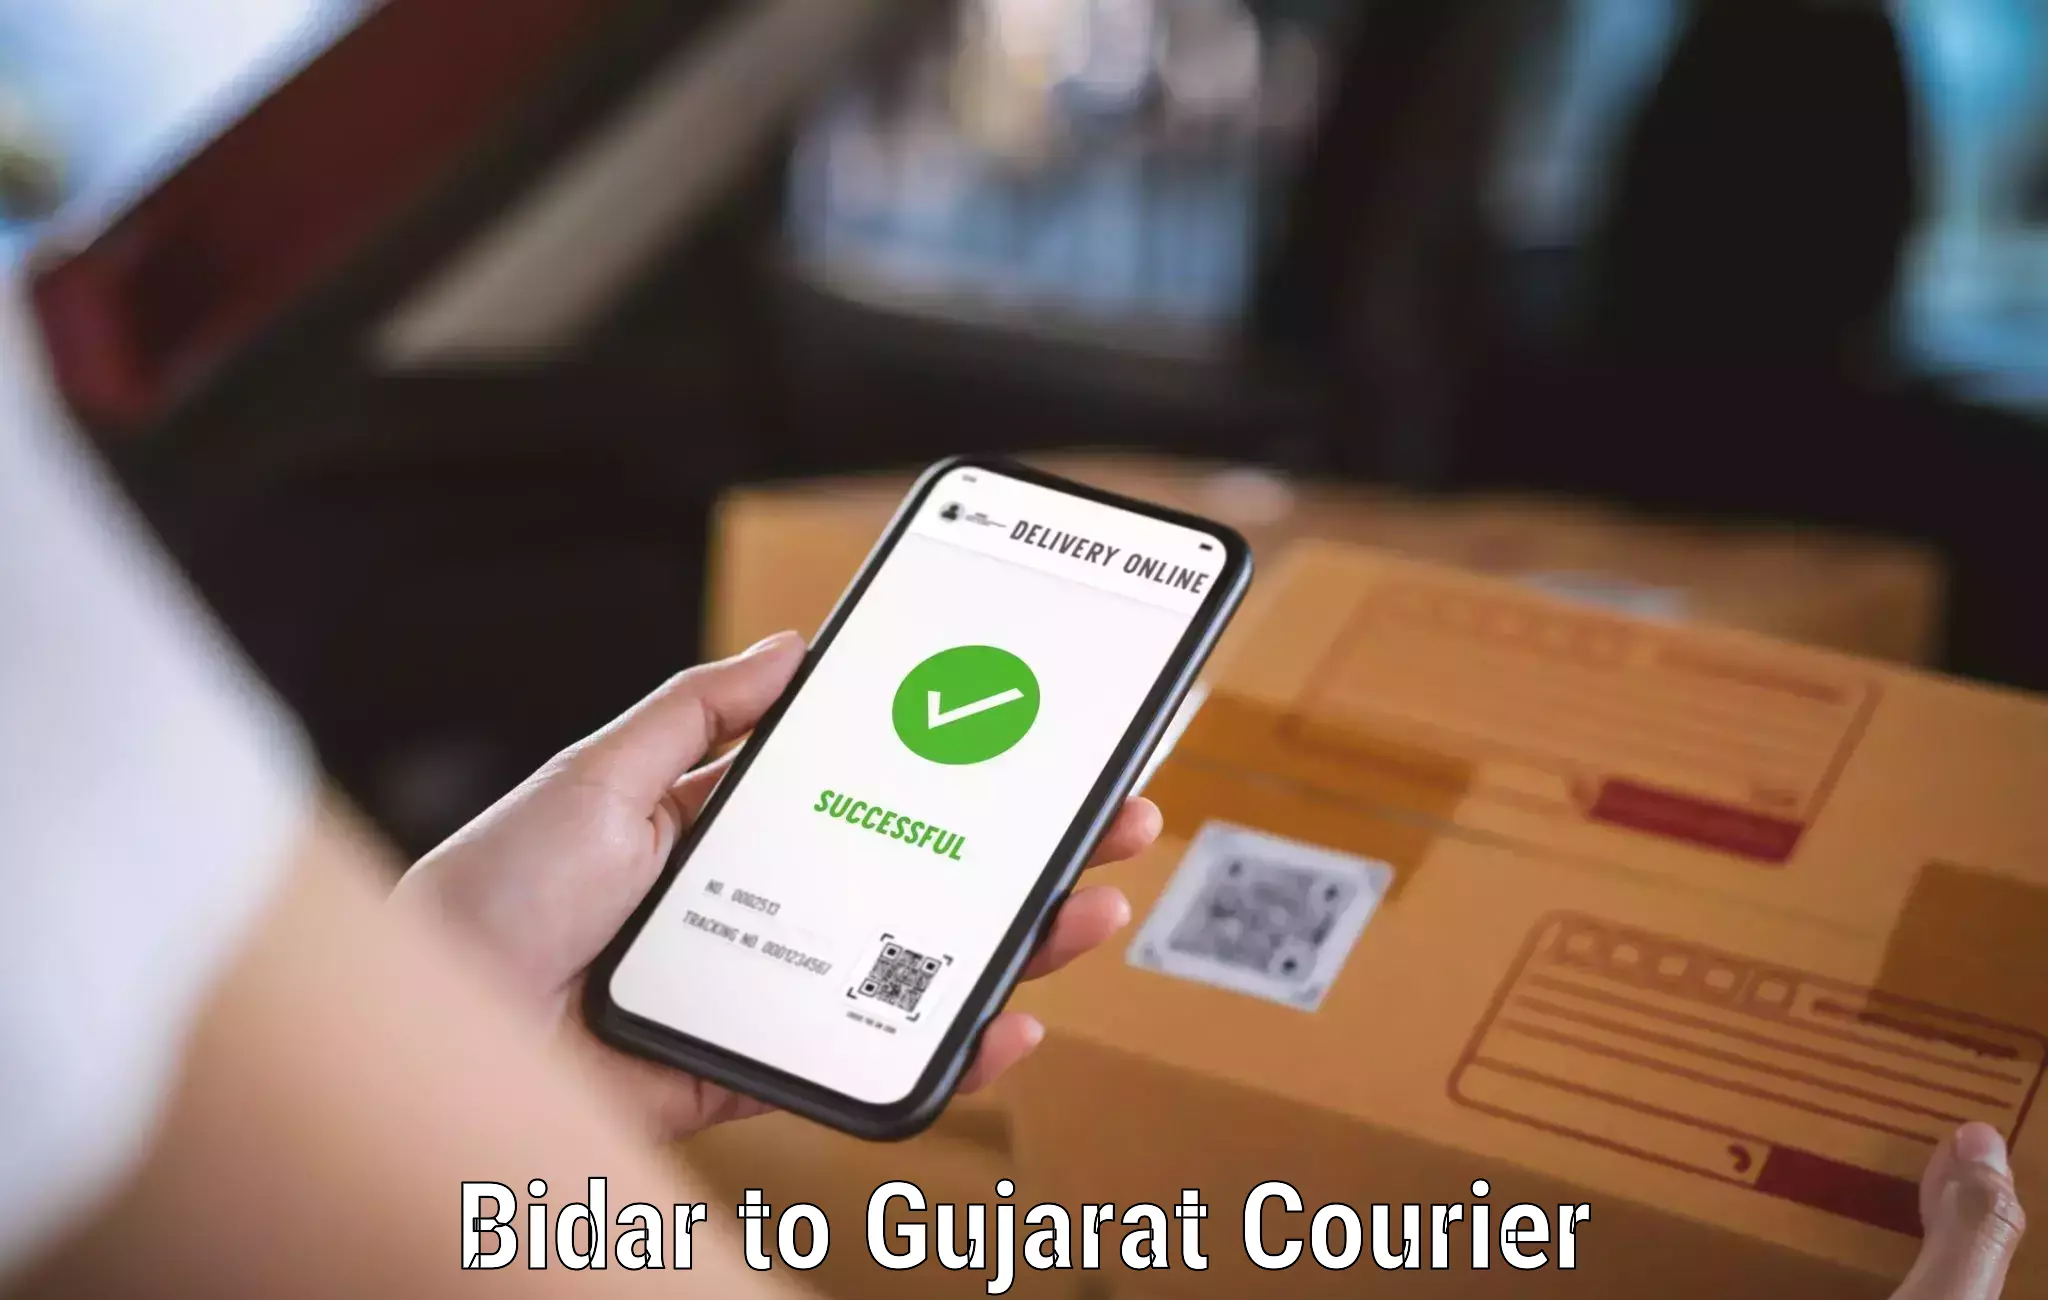 Courier service comparison Bidar to Ahmedabad